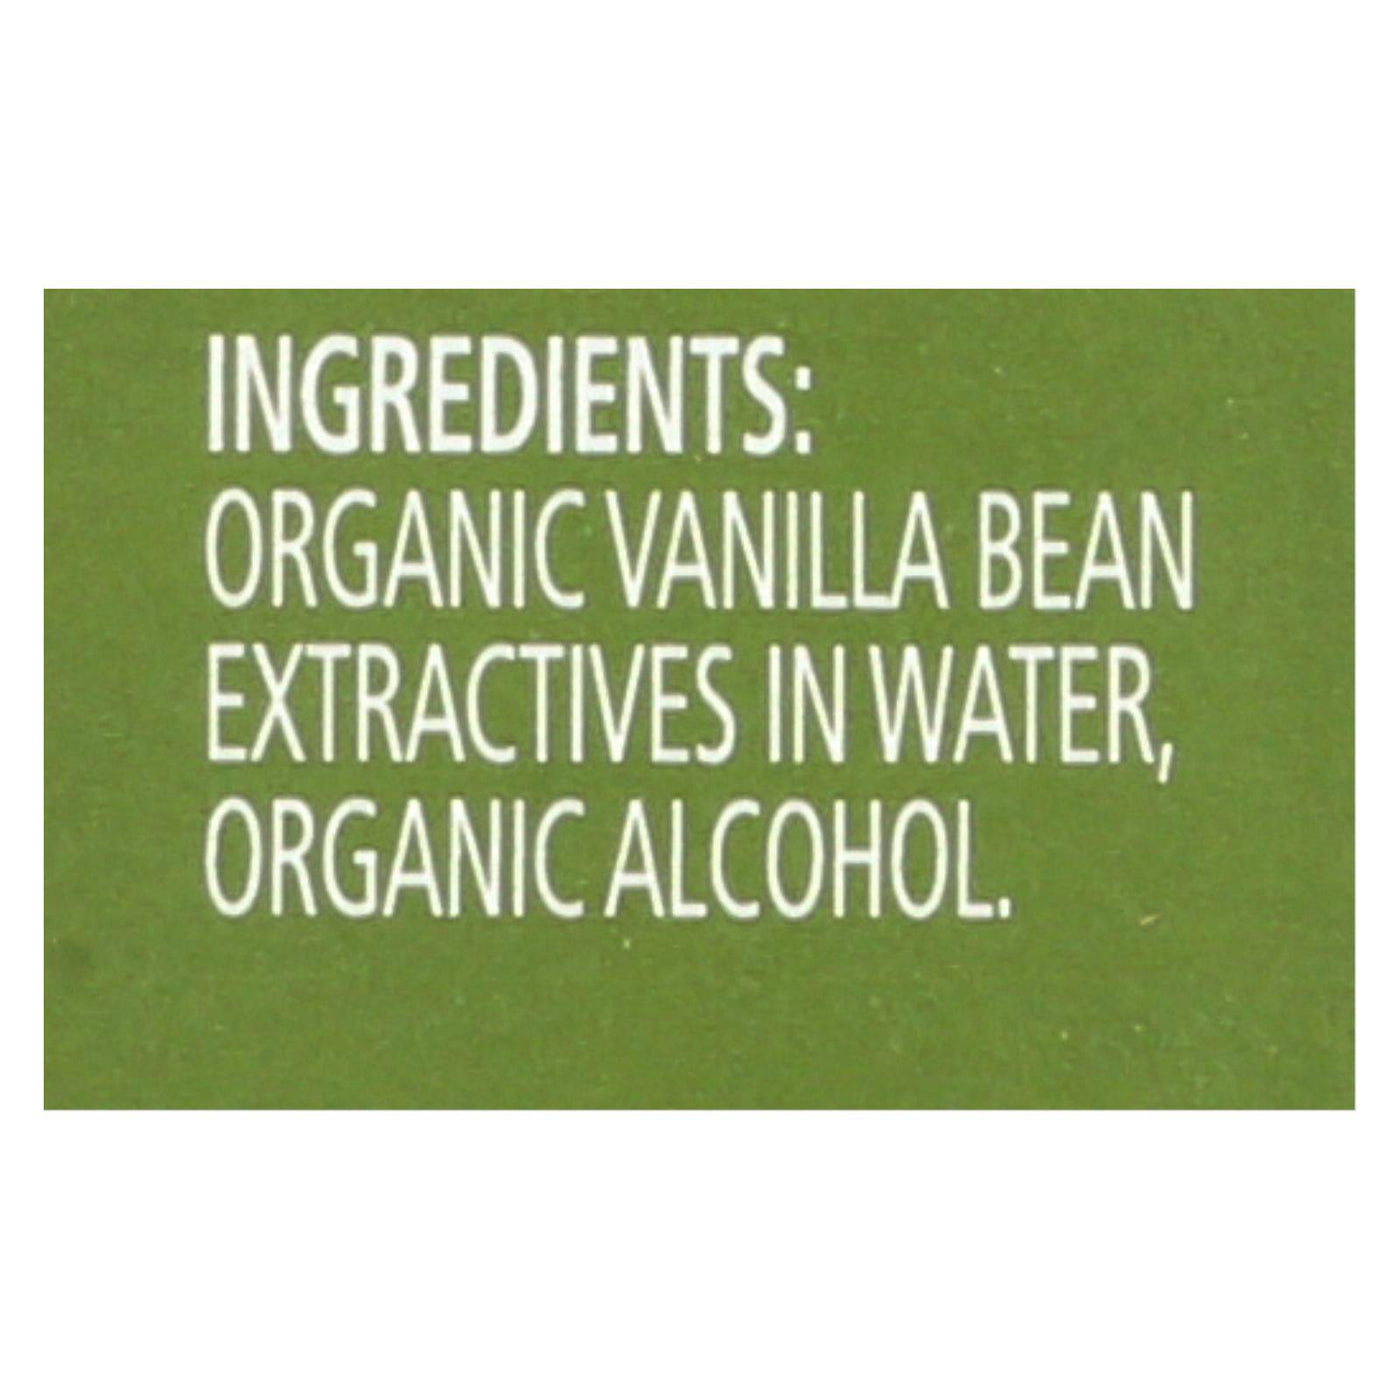 Buy Simply Organic Vanilla Extract - Organic - 4 Oz  at OnlyNaturals.us